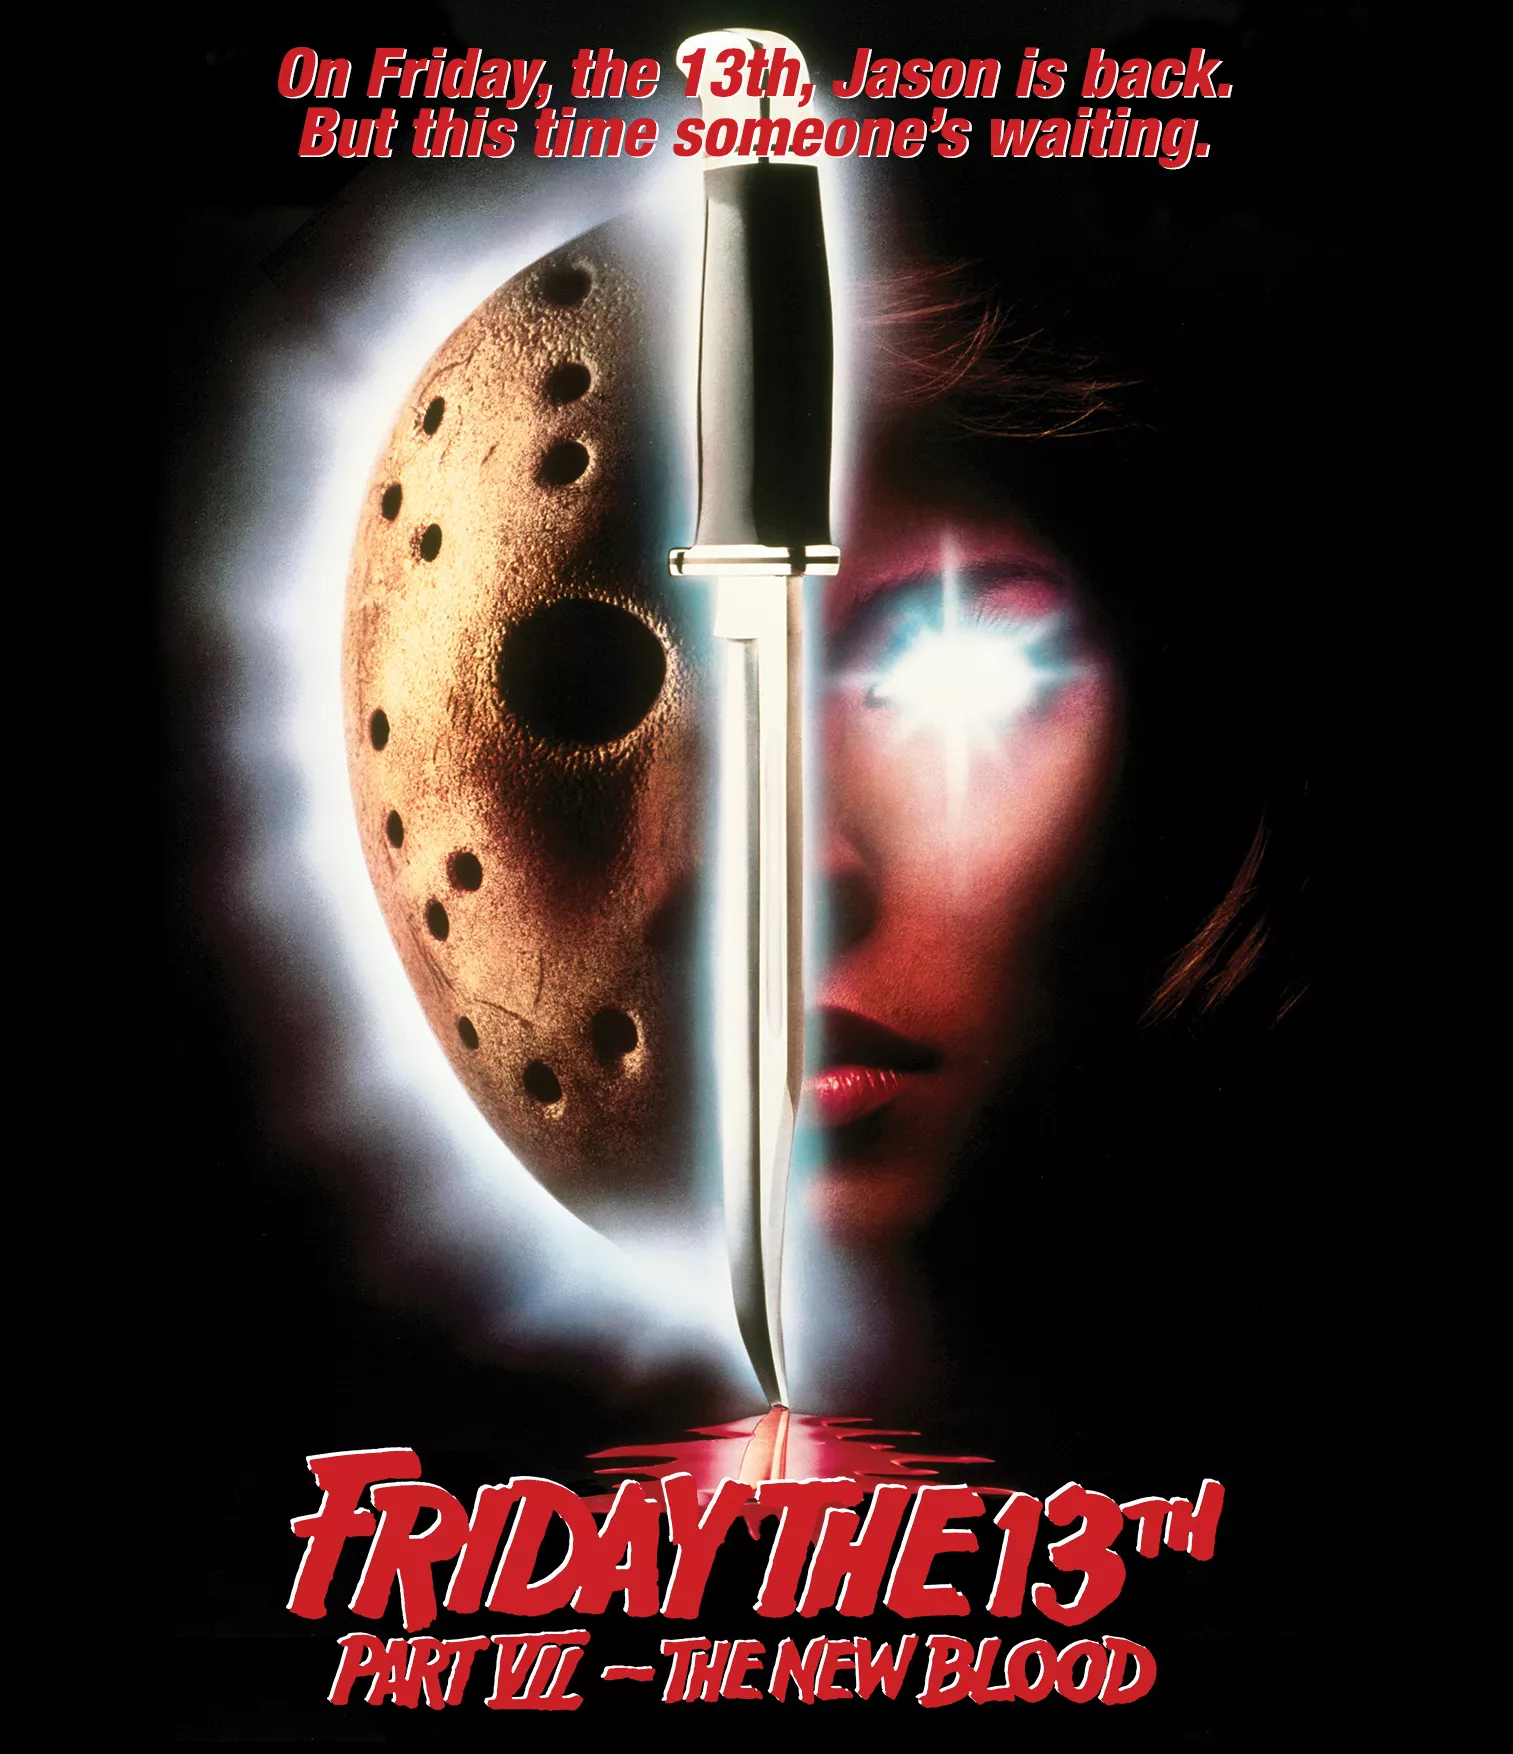 Friday The 13th 4 Full Movie